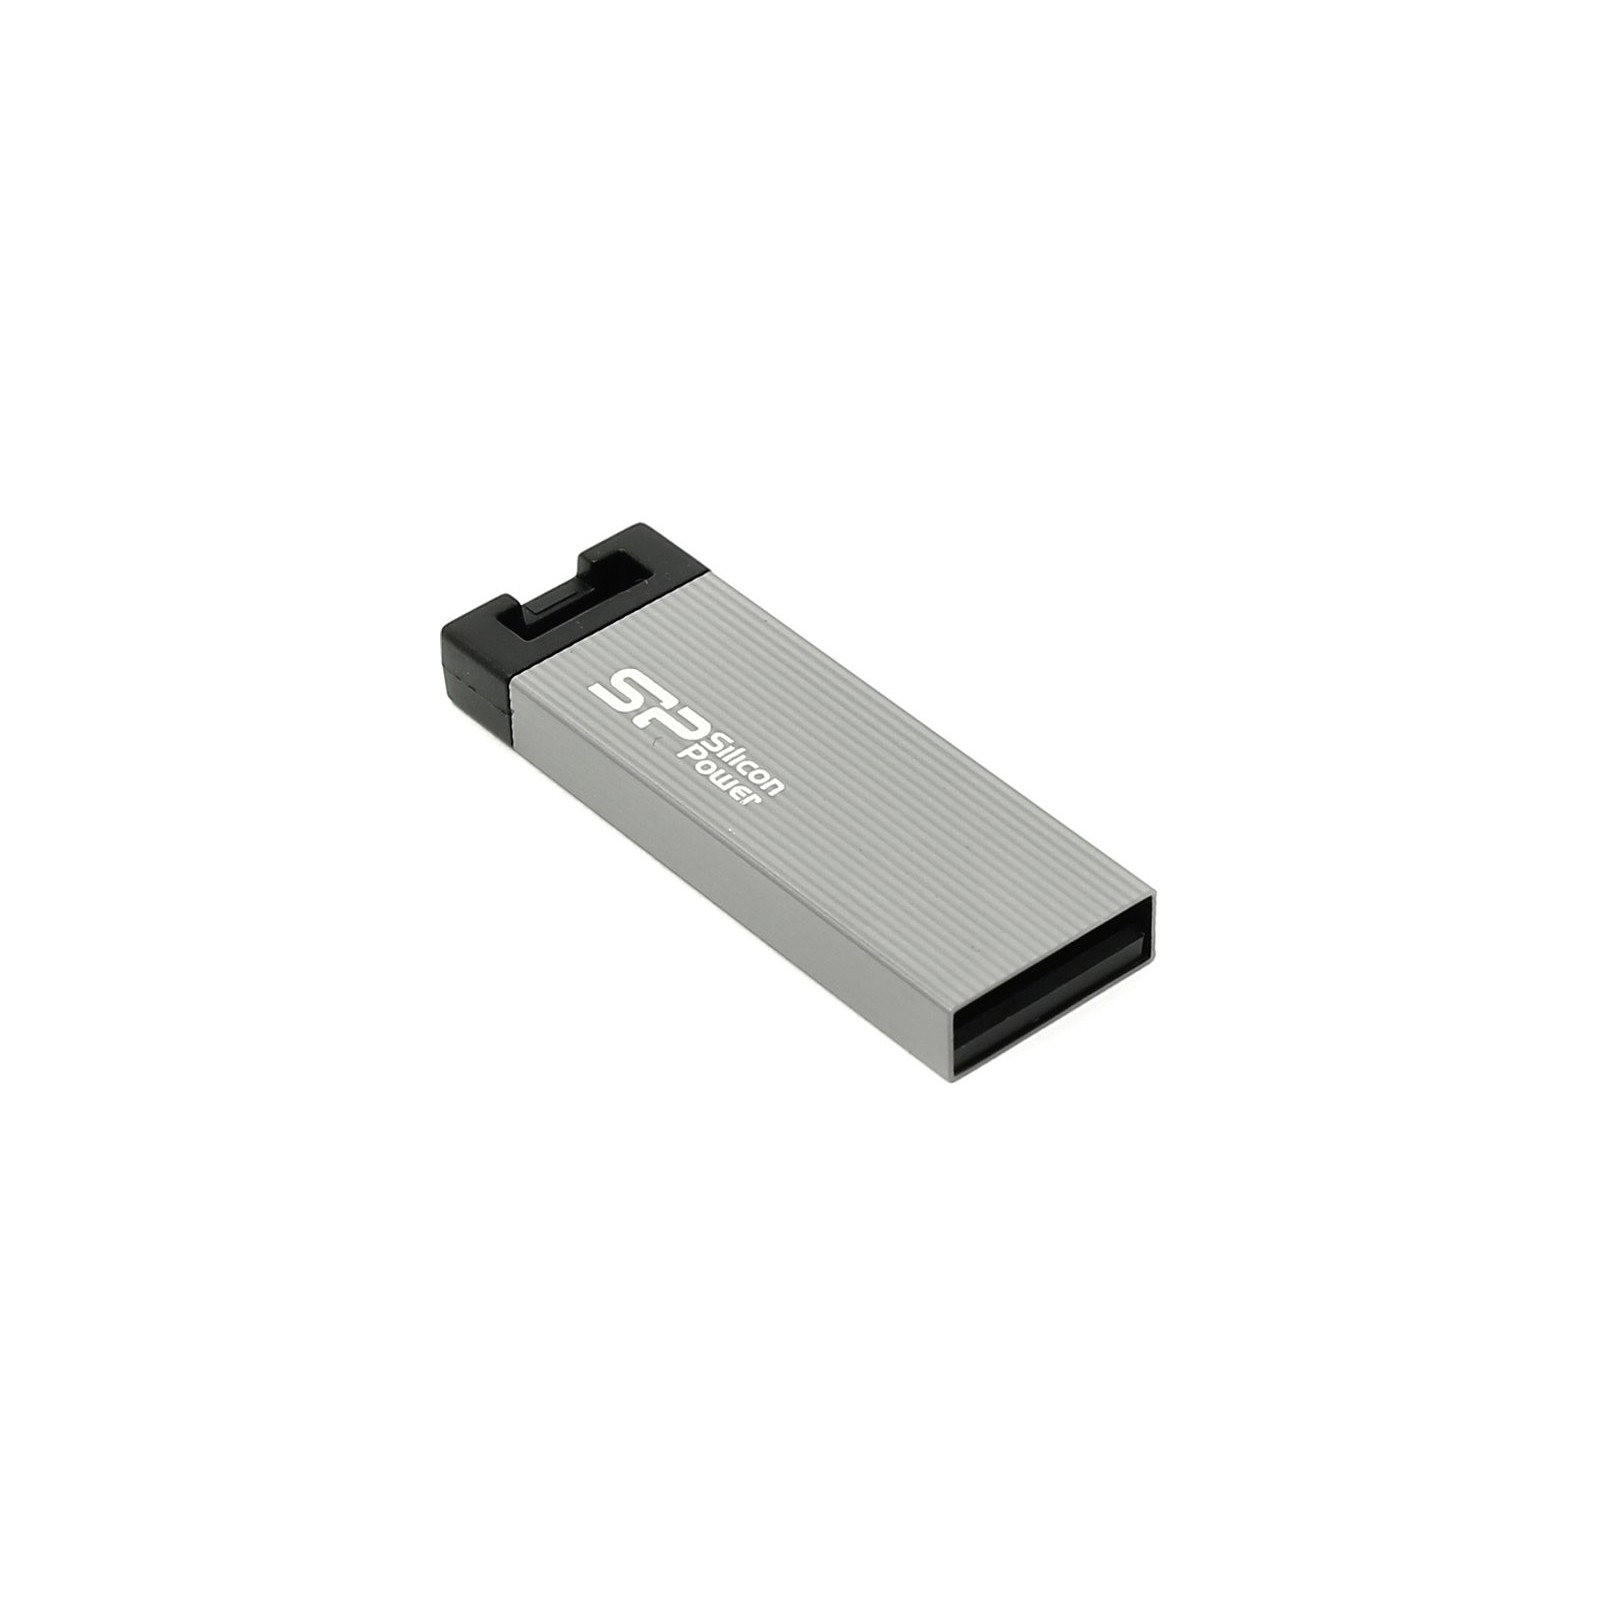 USB флеш накопитель Silicon Power 64GB Touch 835 Titan USB 2.0 (SP064GBUF2835V1T) изображение 5